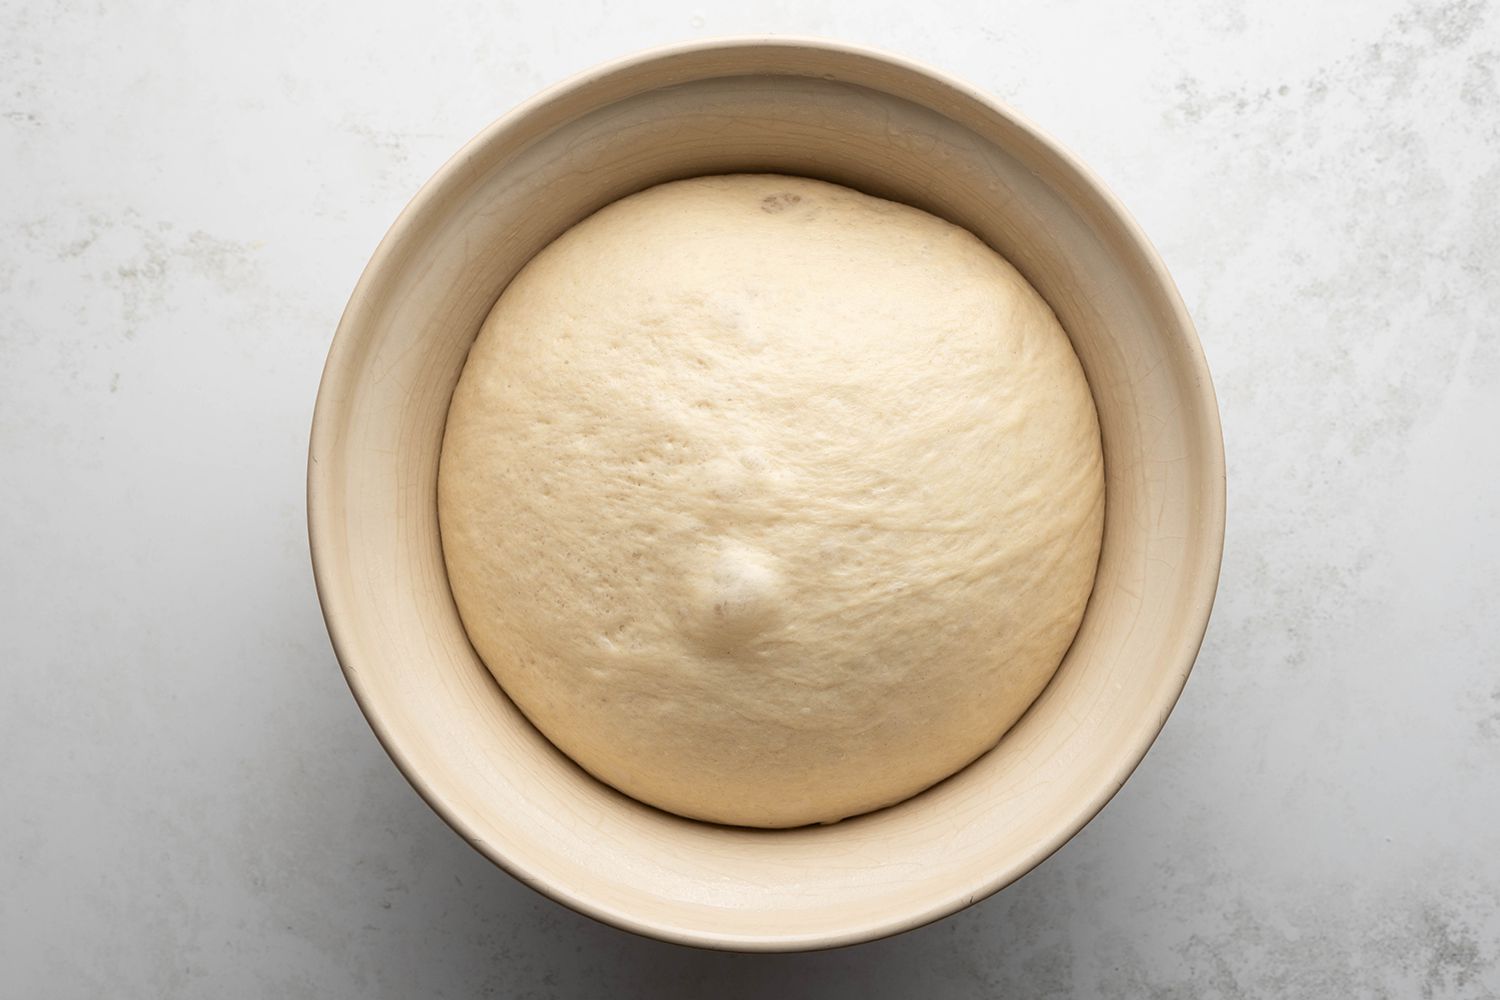 Dough in a bowl 